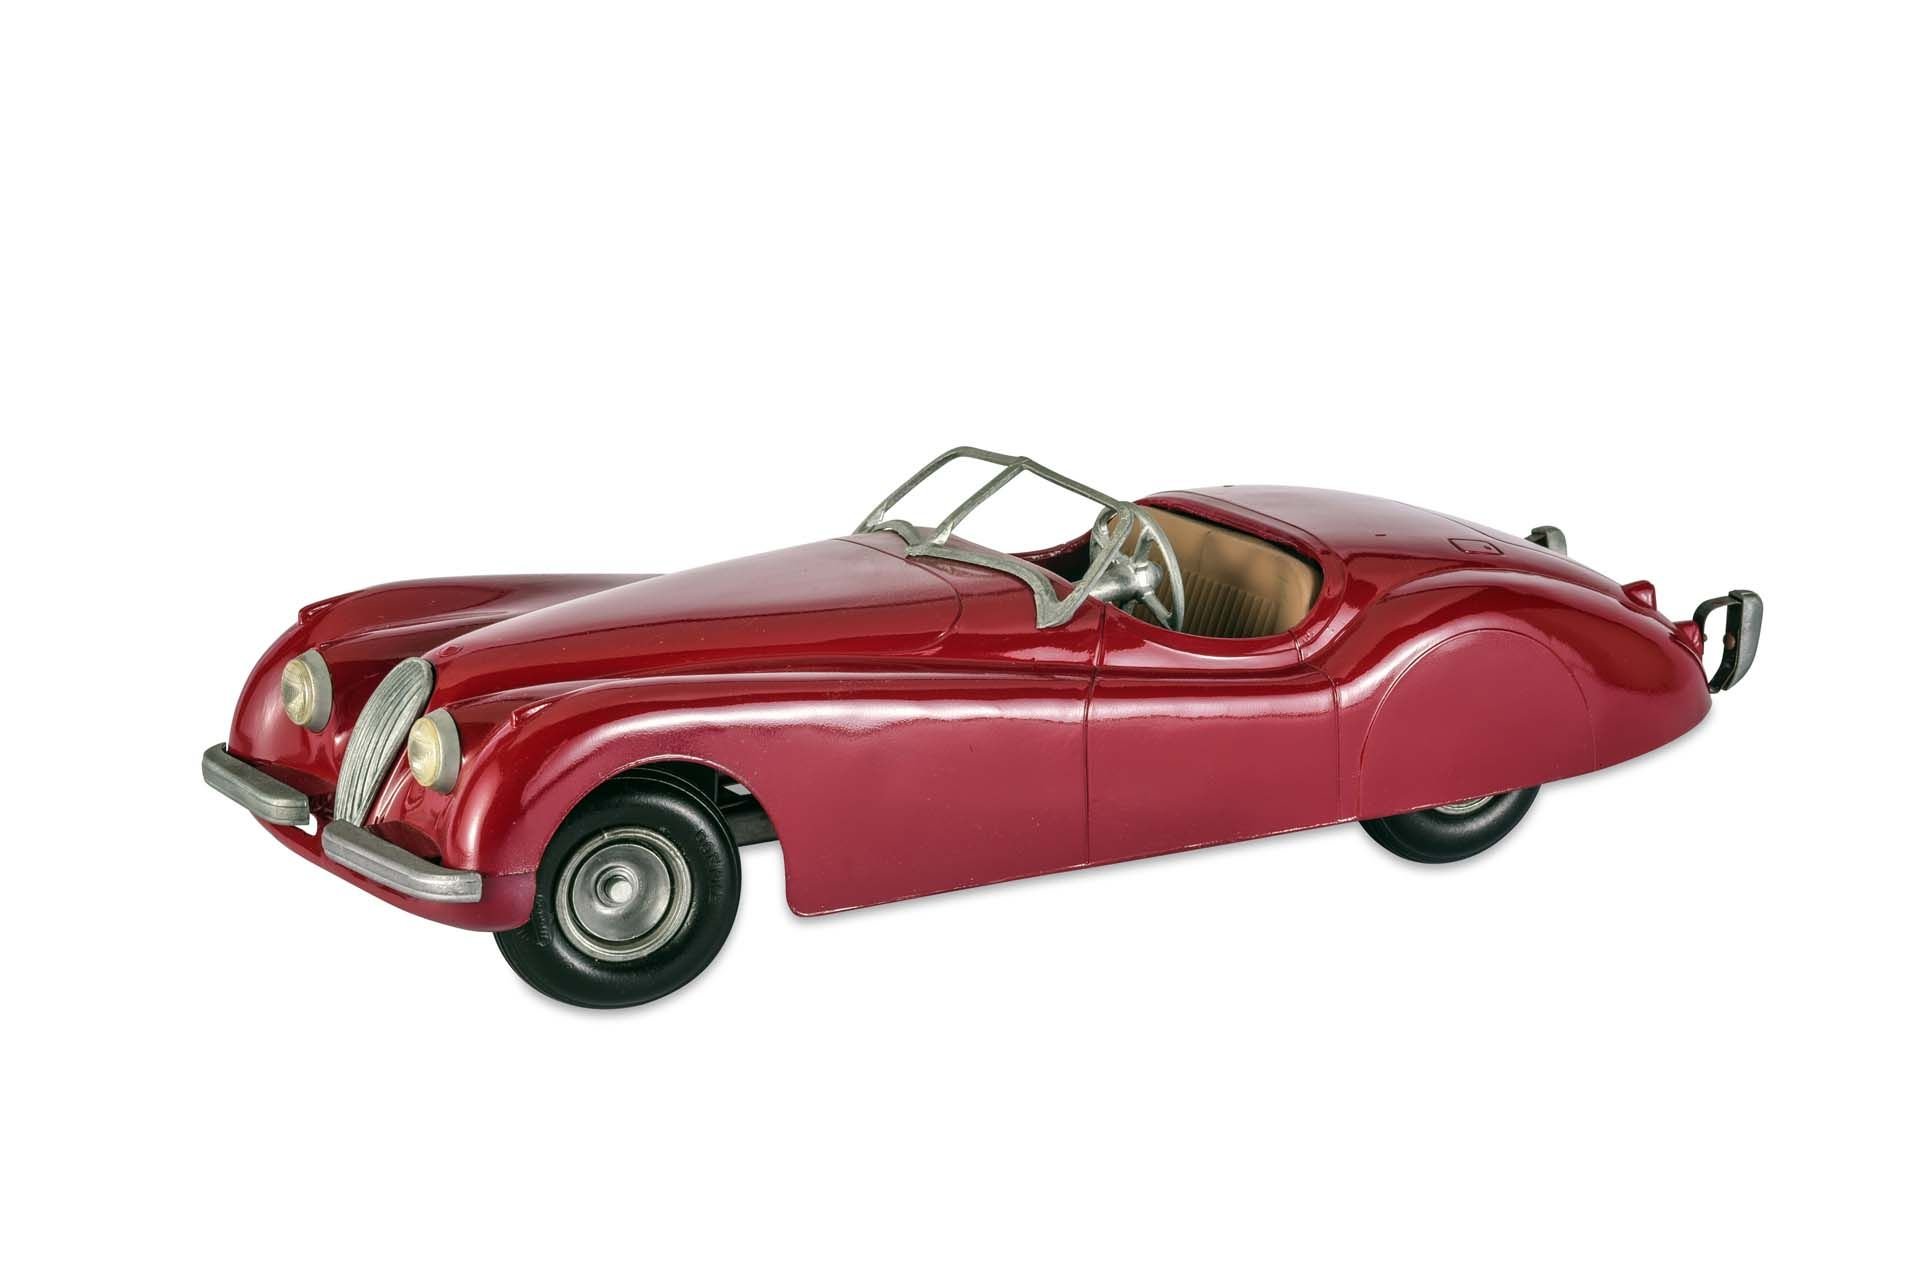 For Sale Doepke Toys 'Jaguar XK120 1950s' 17-inch toy car, Claret